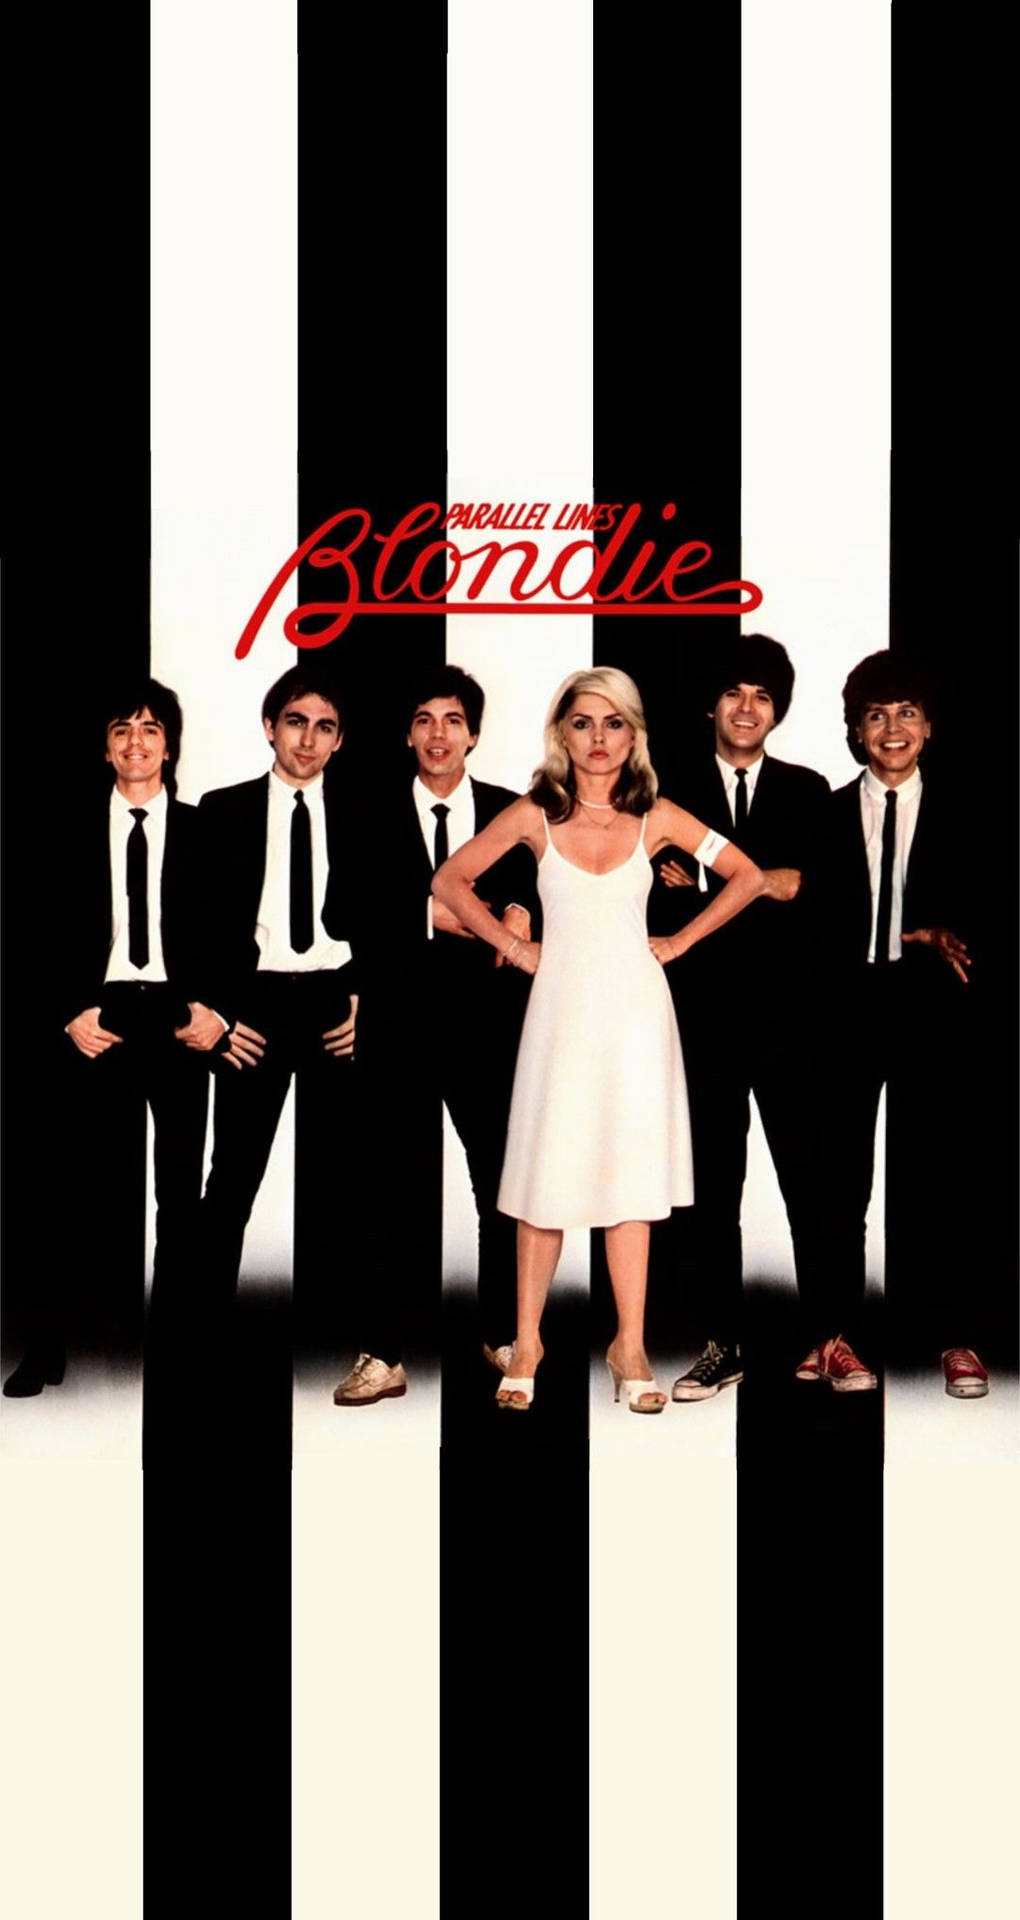 Blondie 1970s Band Parallel Lines Album Art Background